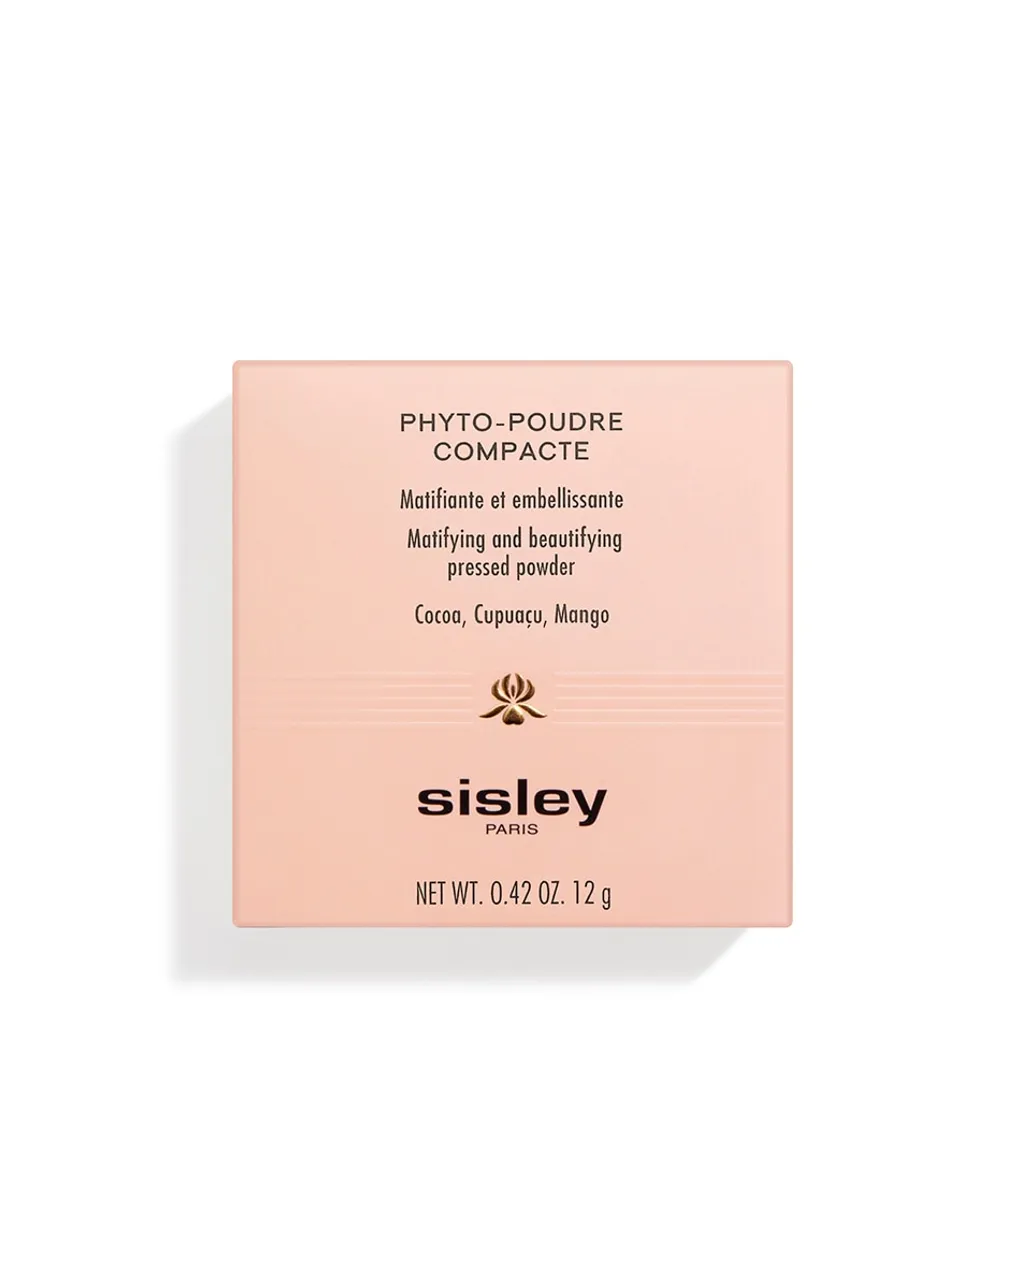 Sisley Phyto-poudre COMPACT POWDER